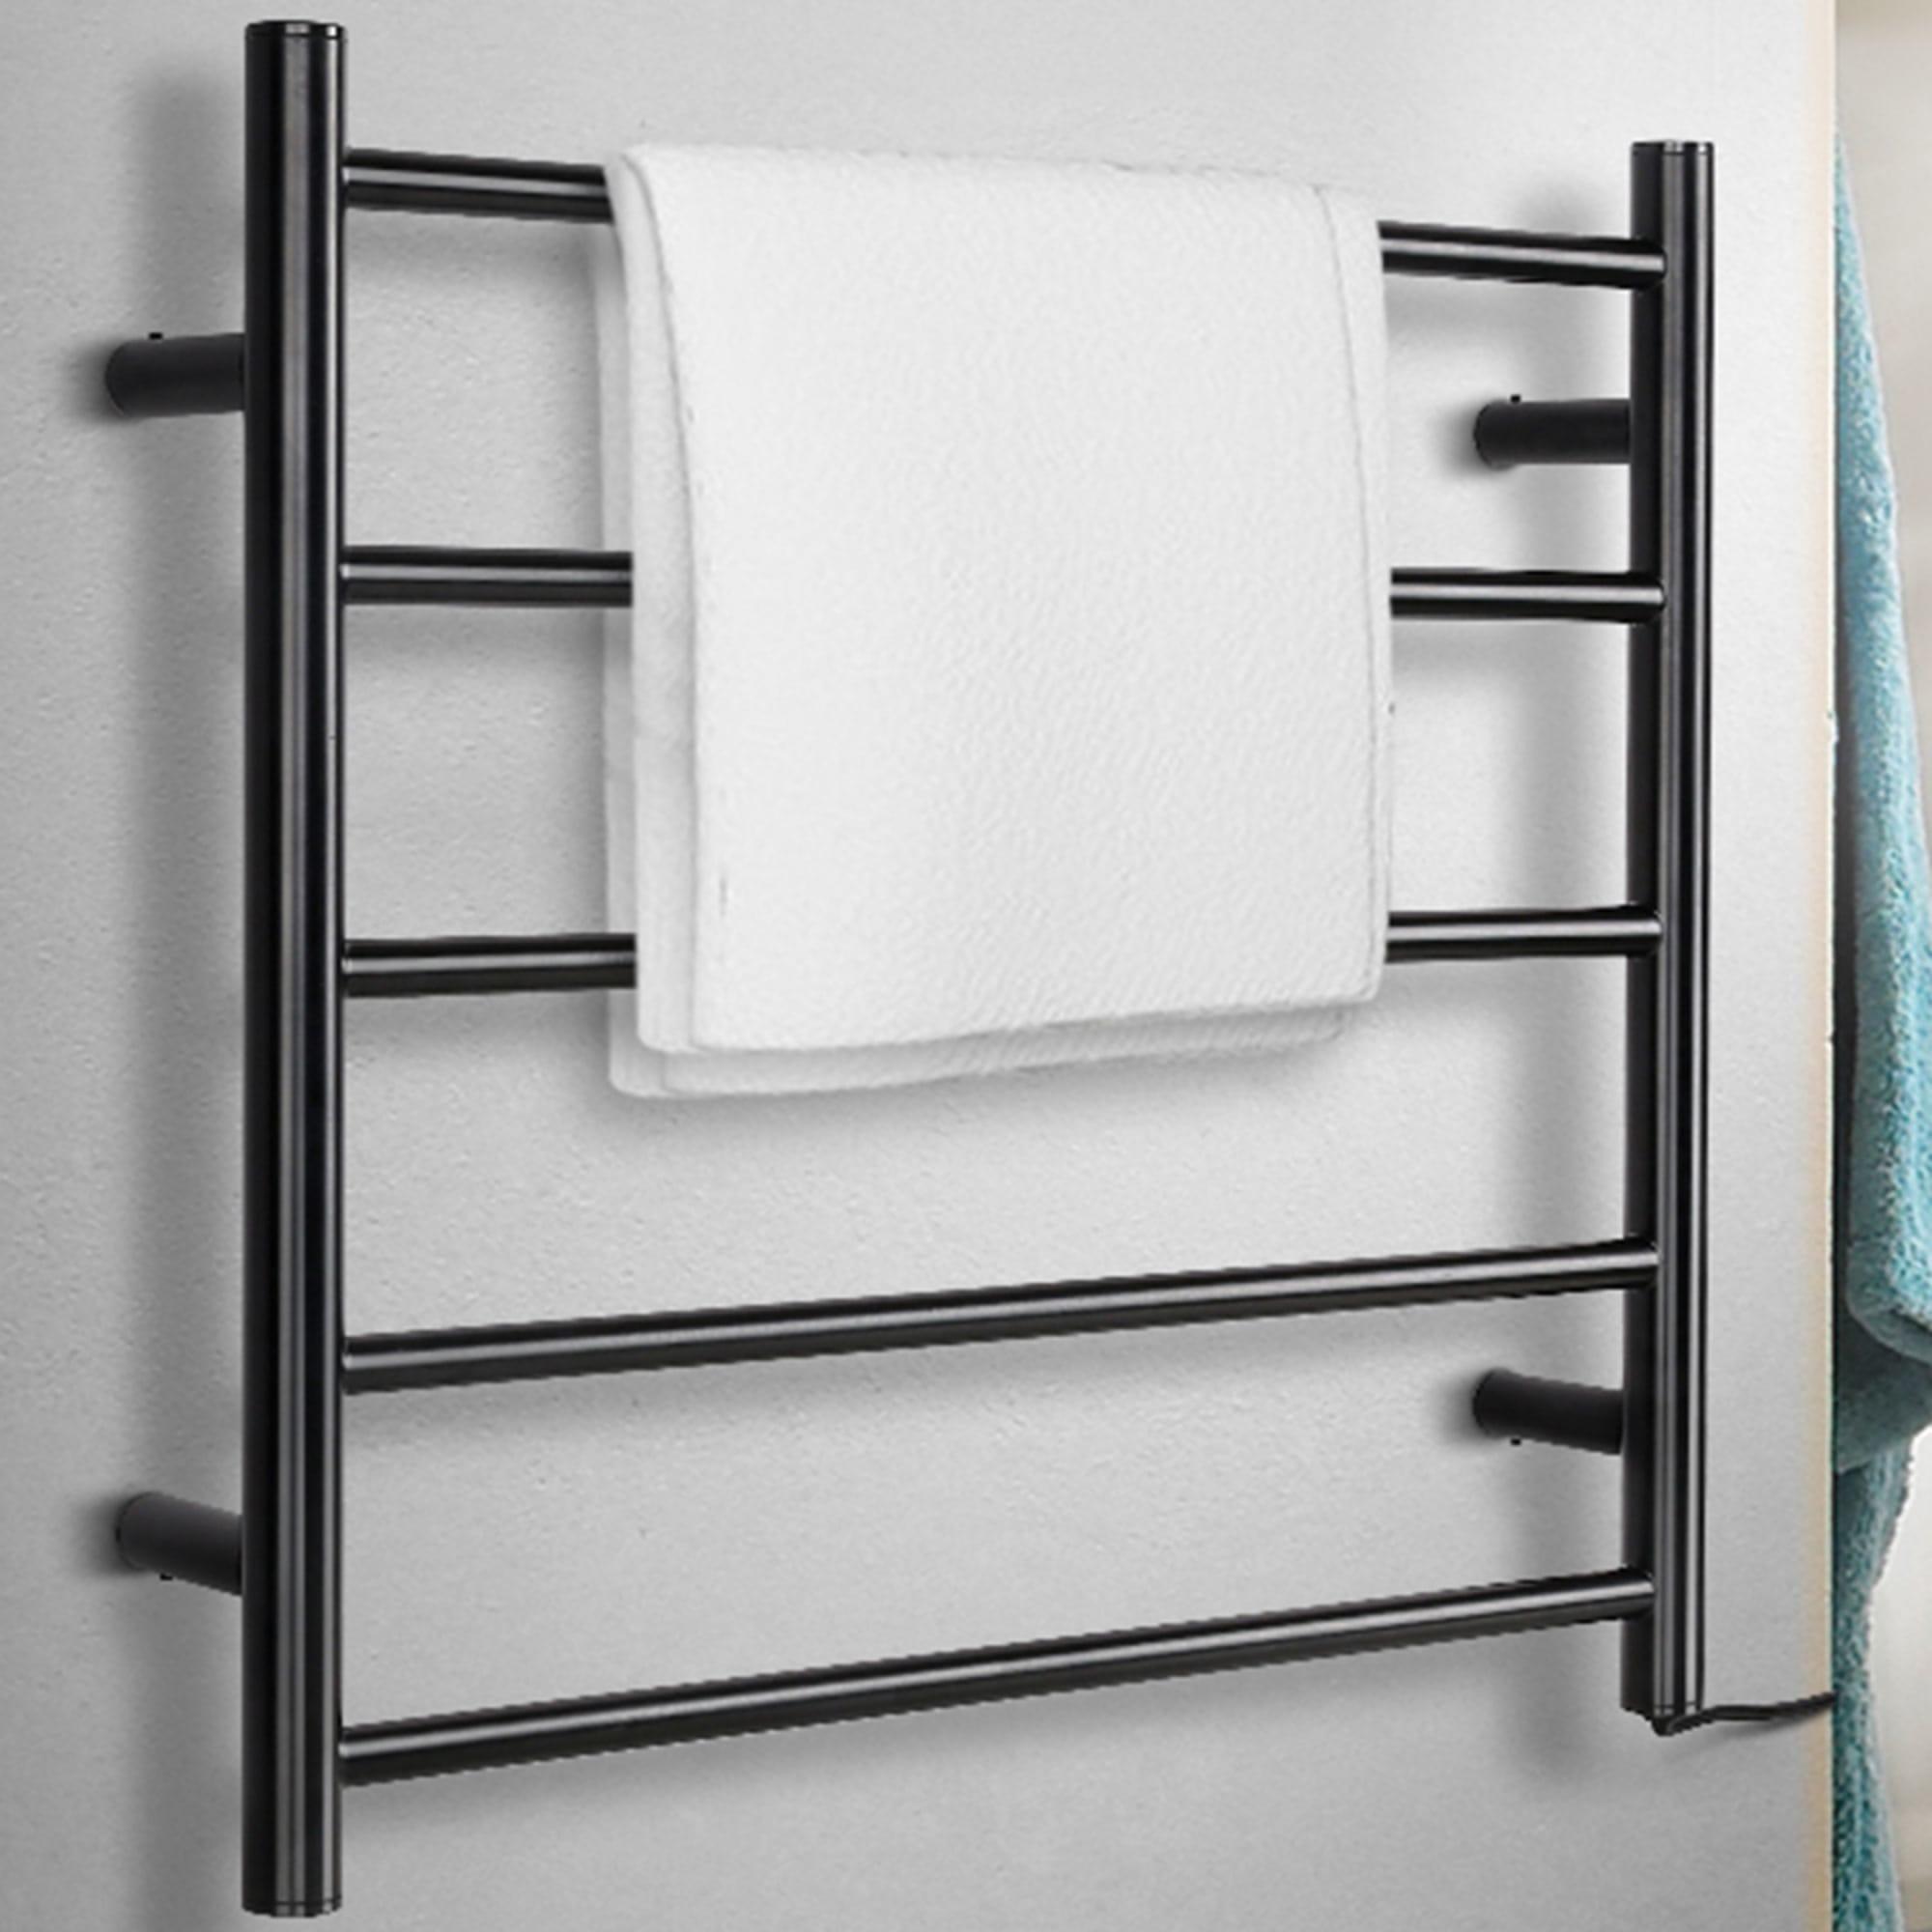 Devanti Electric Heated Towel Rail Rack 5 Bars Wall Mounted Clothes Dry Warmer Image 3